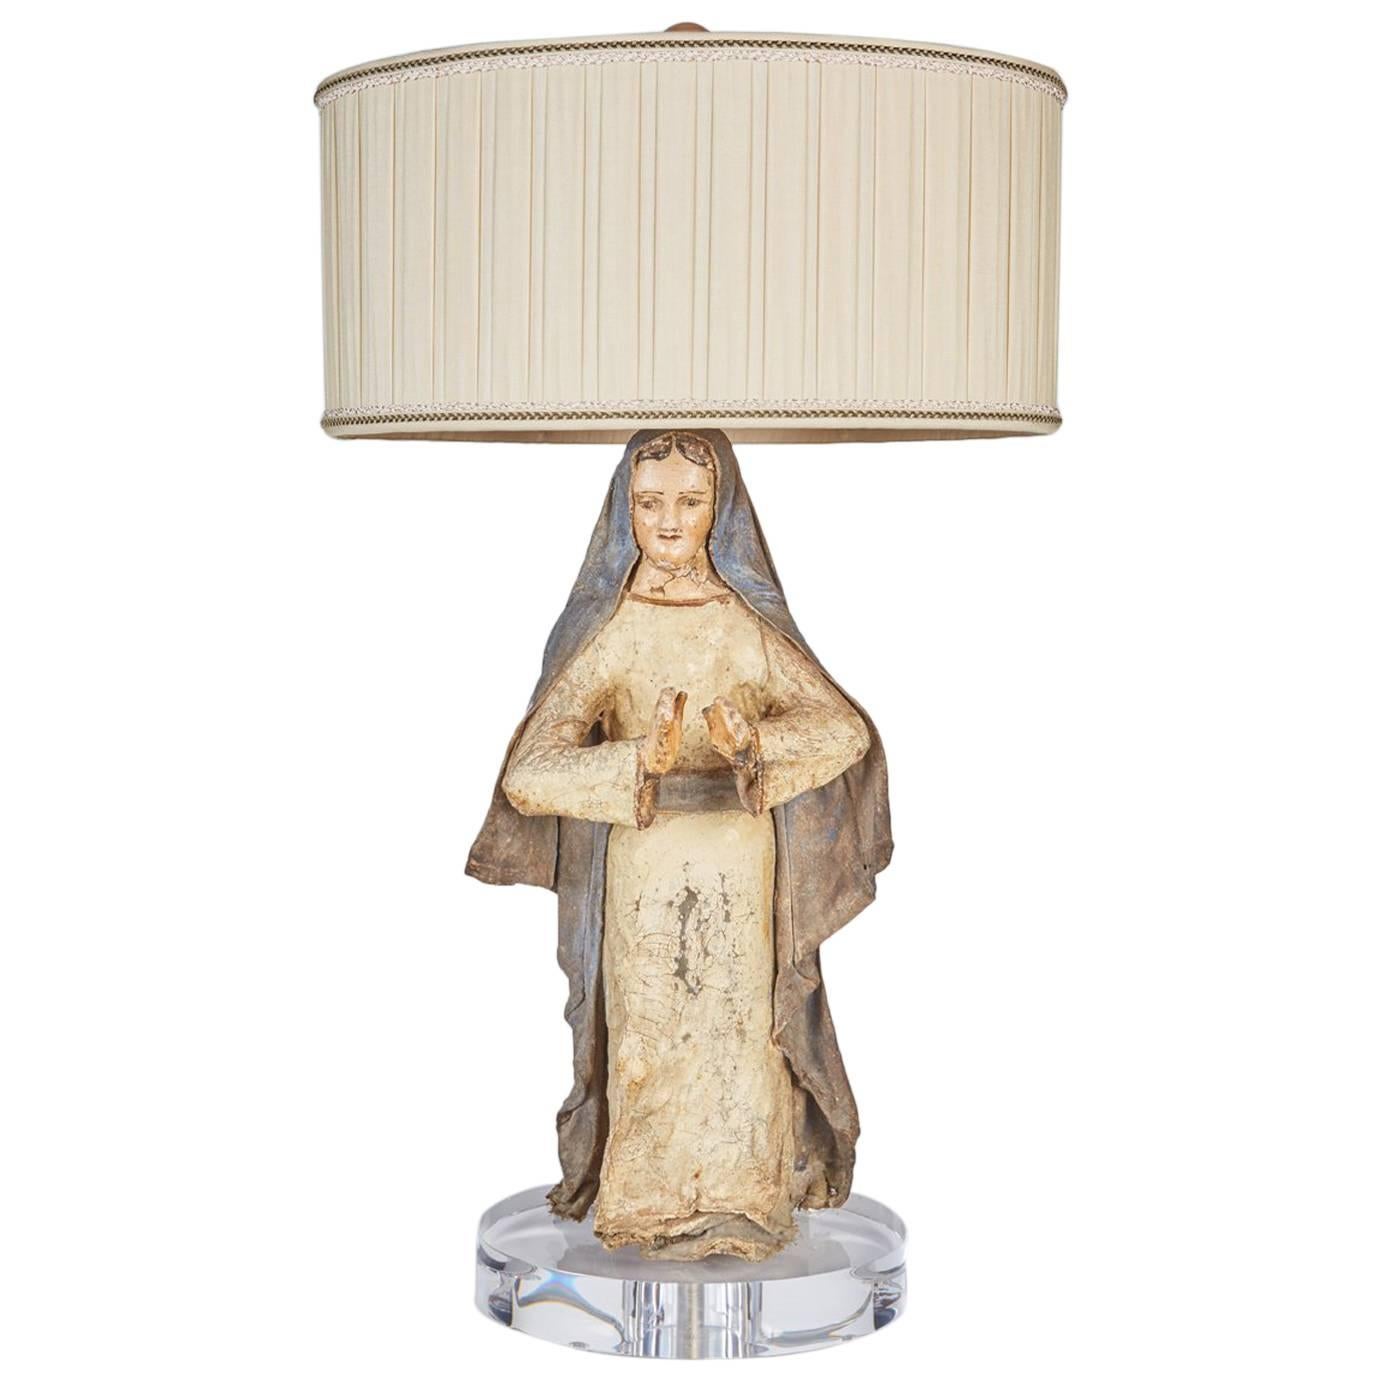 Antique Papier Mâché Creche Figure of the Madonna Now Custom Mounted as a Lamp For Sale